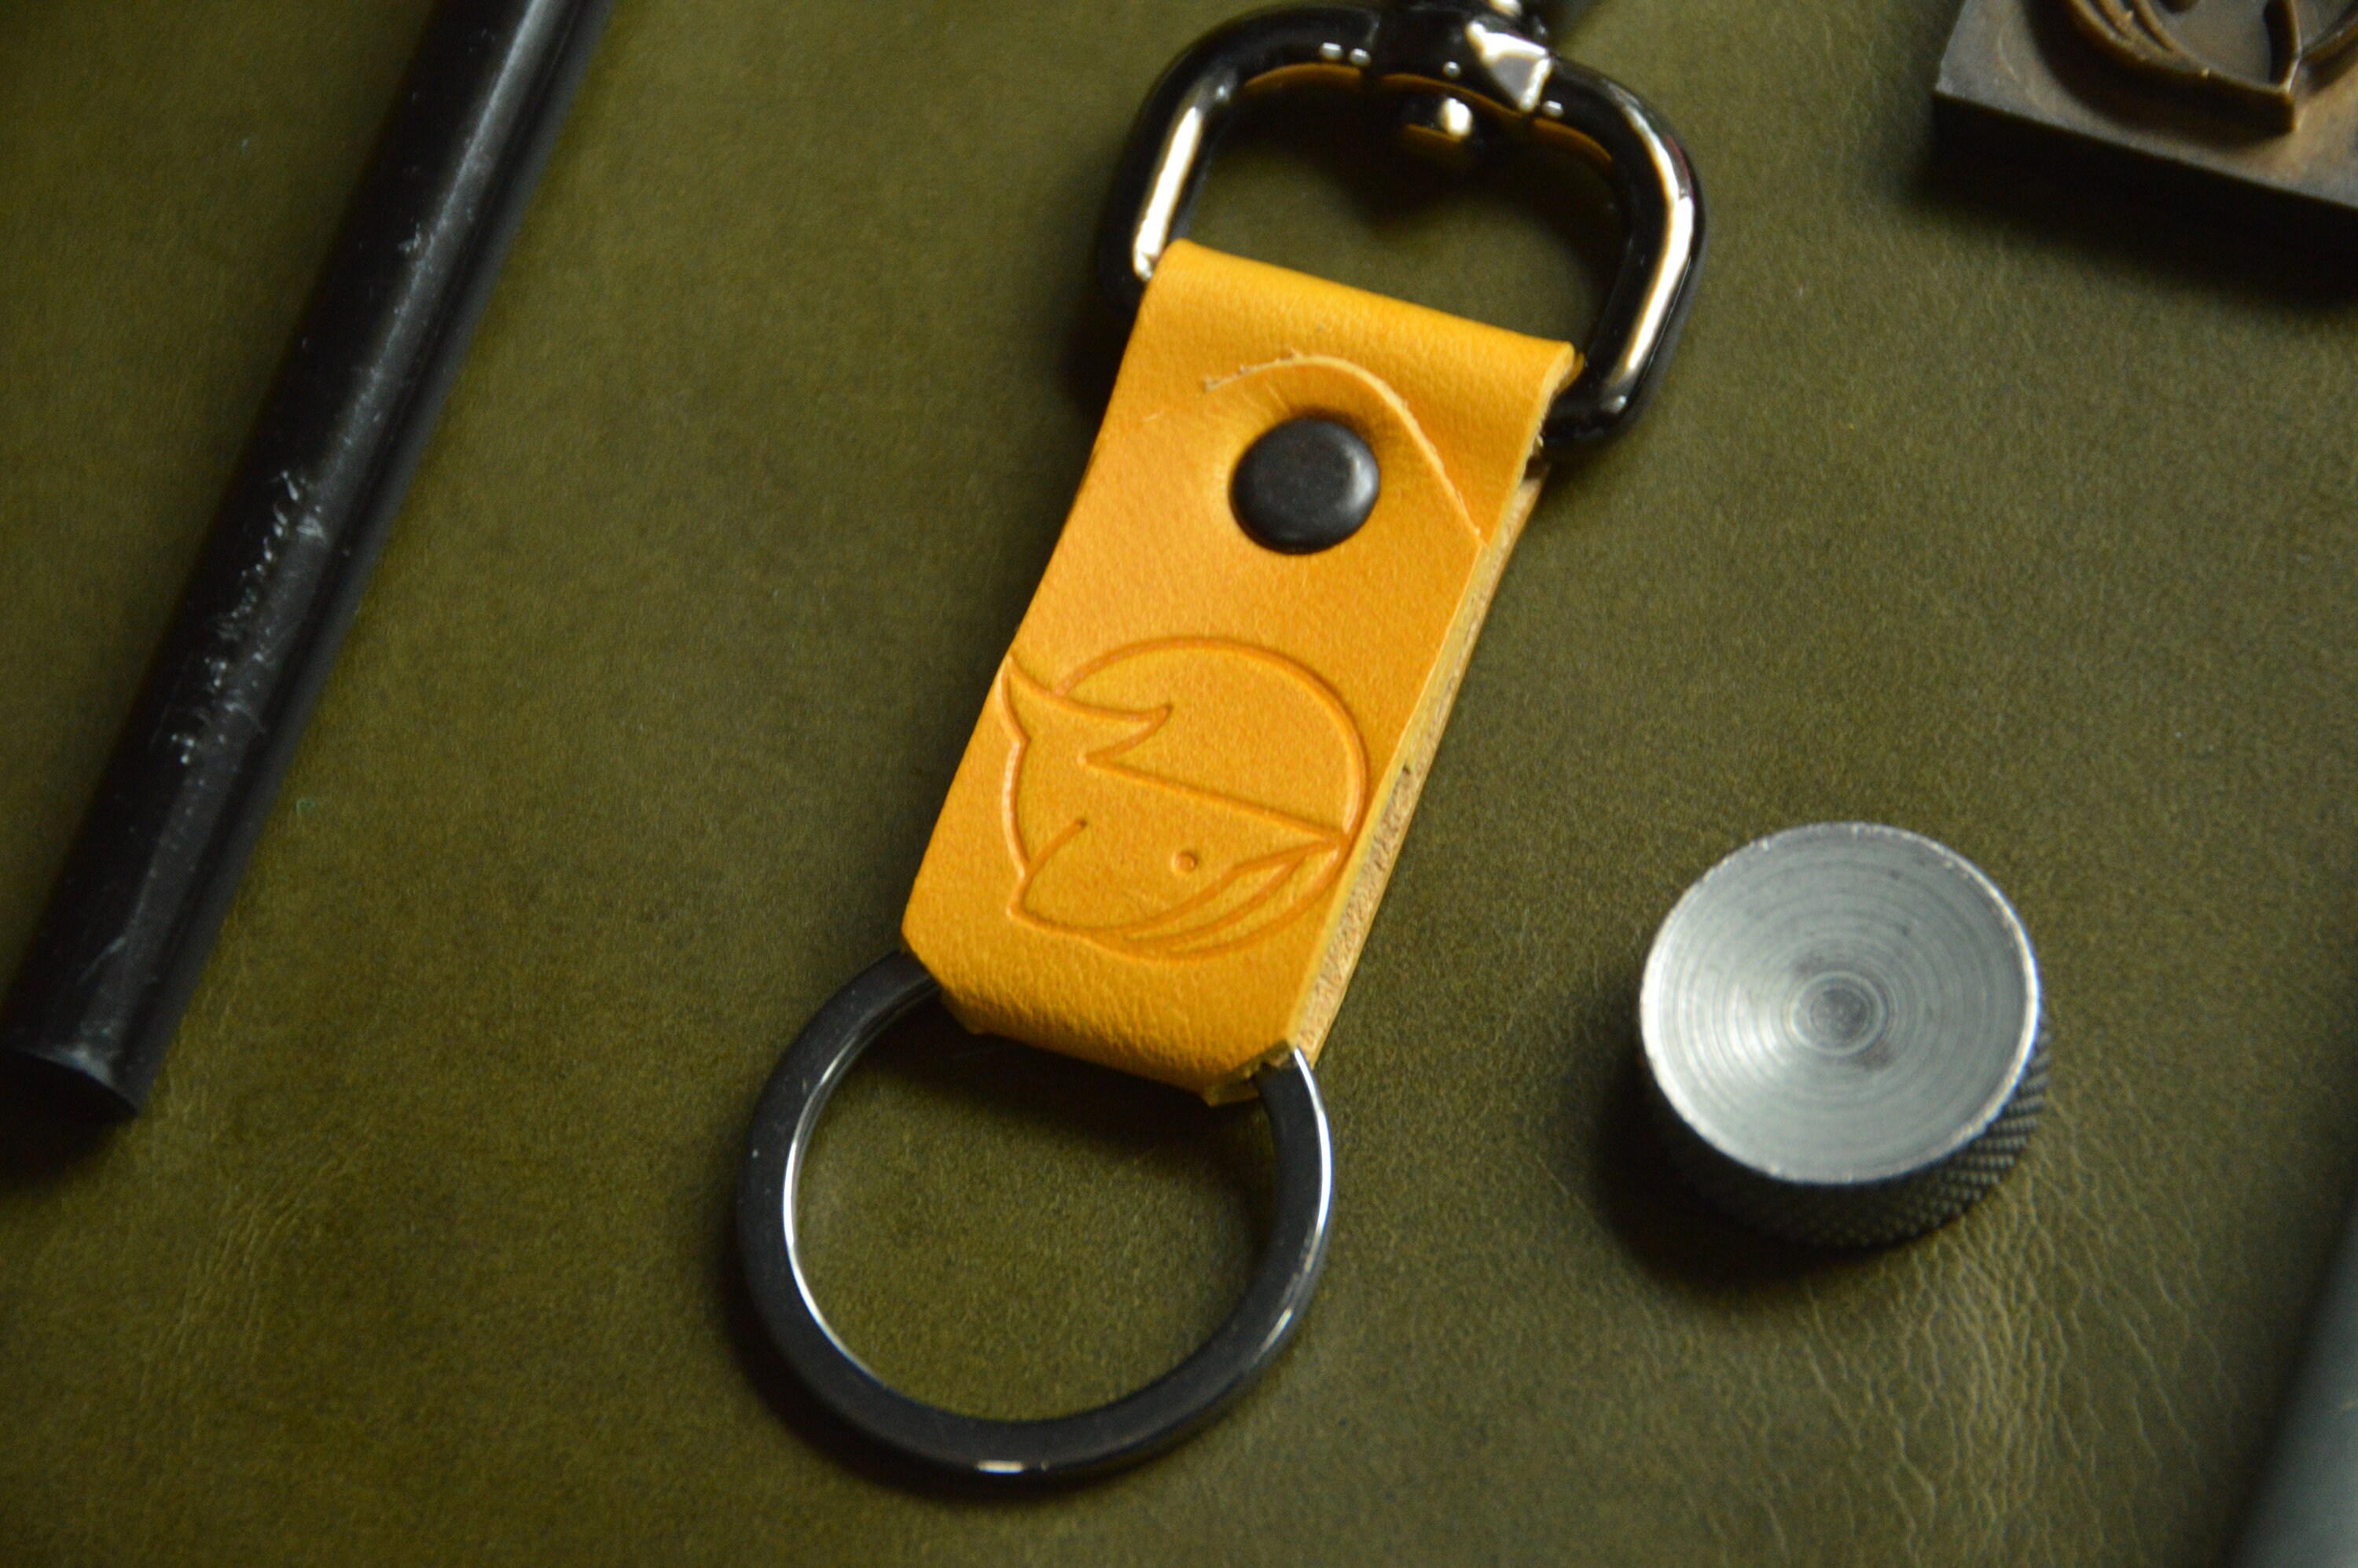 Snap Hook Keychain by Flowfold EcoPak: Recycled Heather Grey